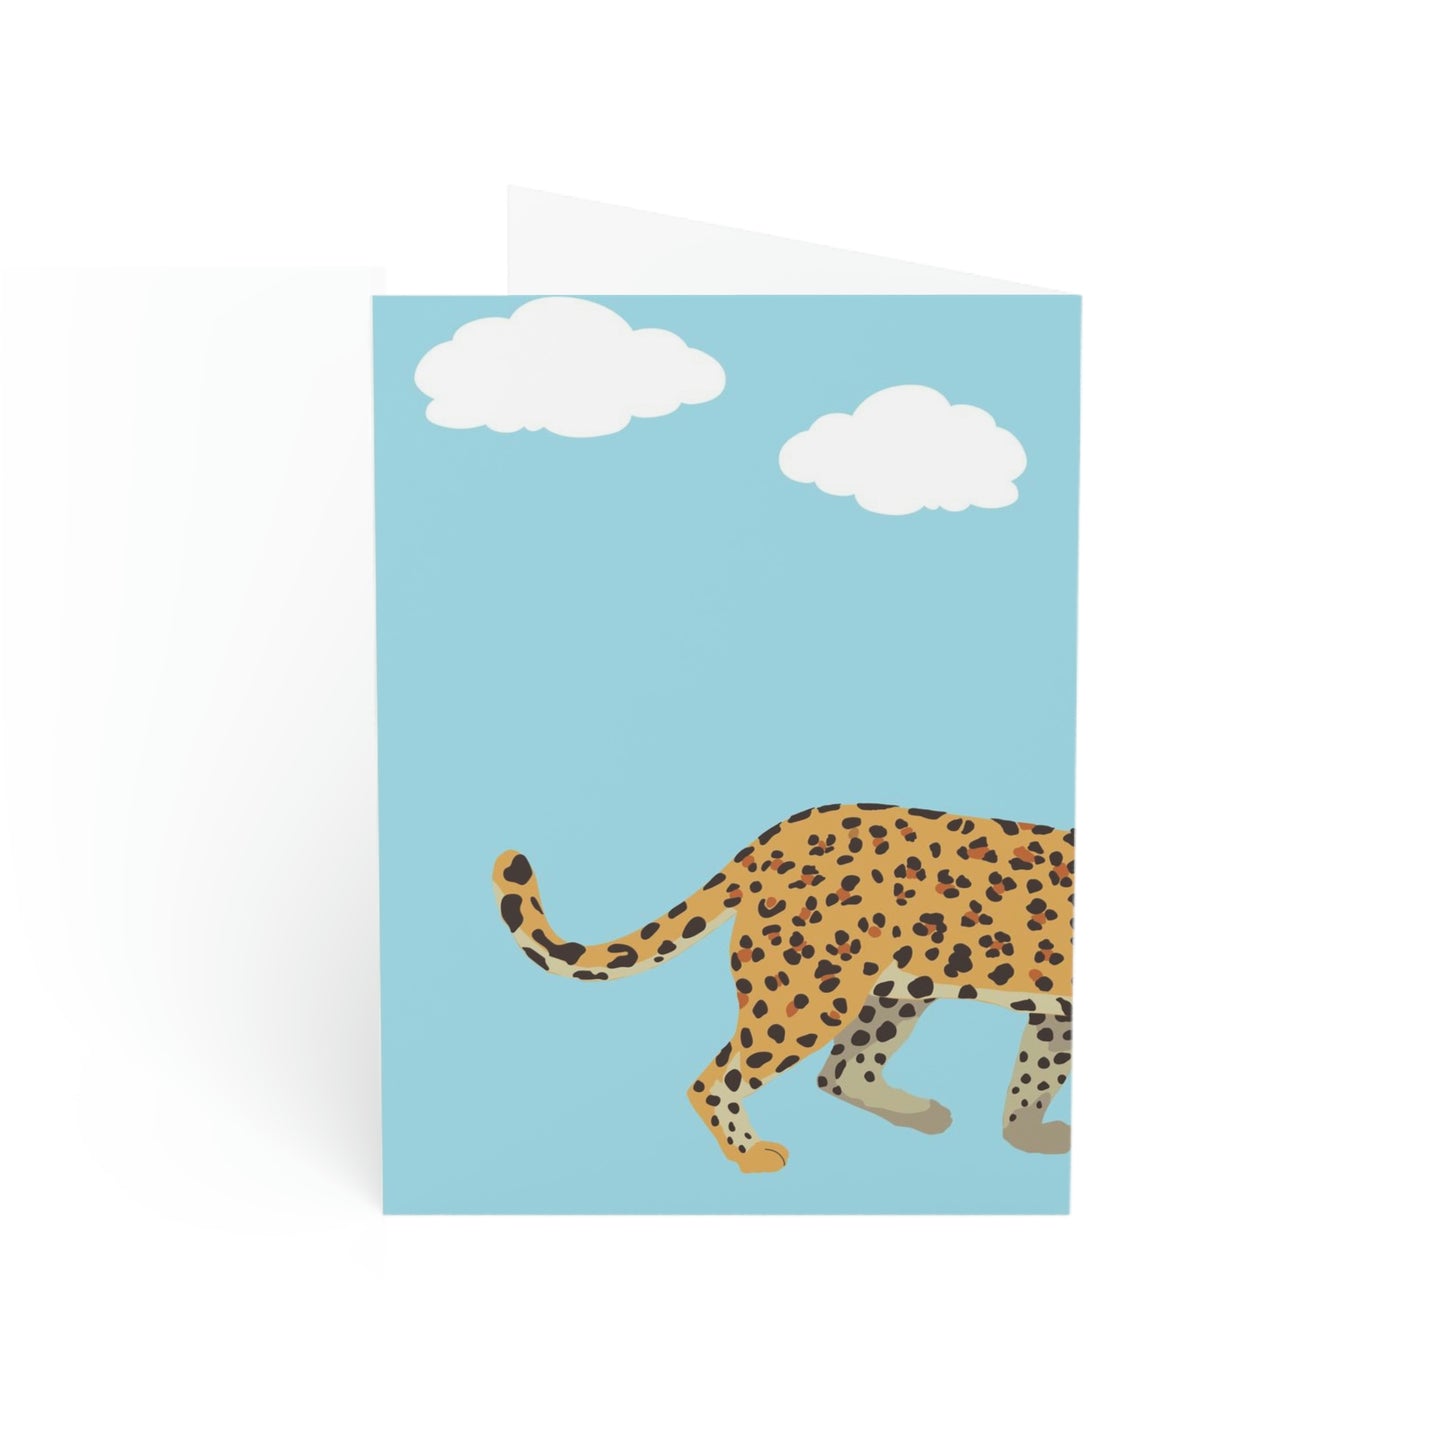 Leopard Birthday Cards